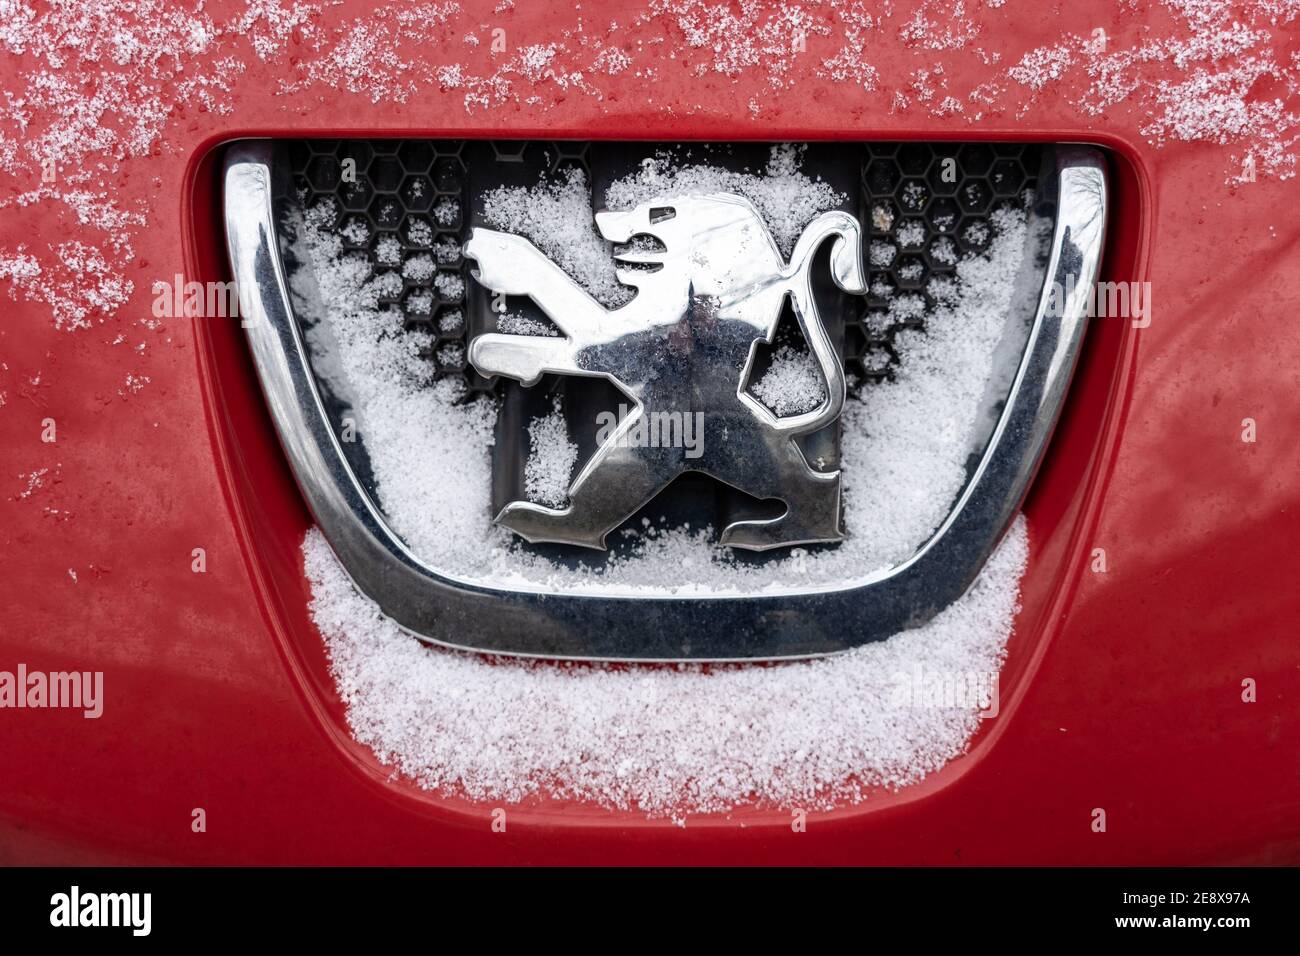 Peugeot emblem -Fotos und -Bildmaterial in hoher Auflösung – Alamy